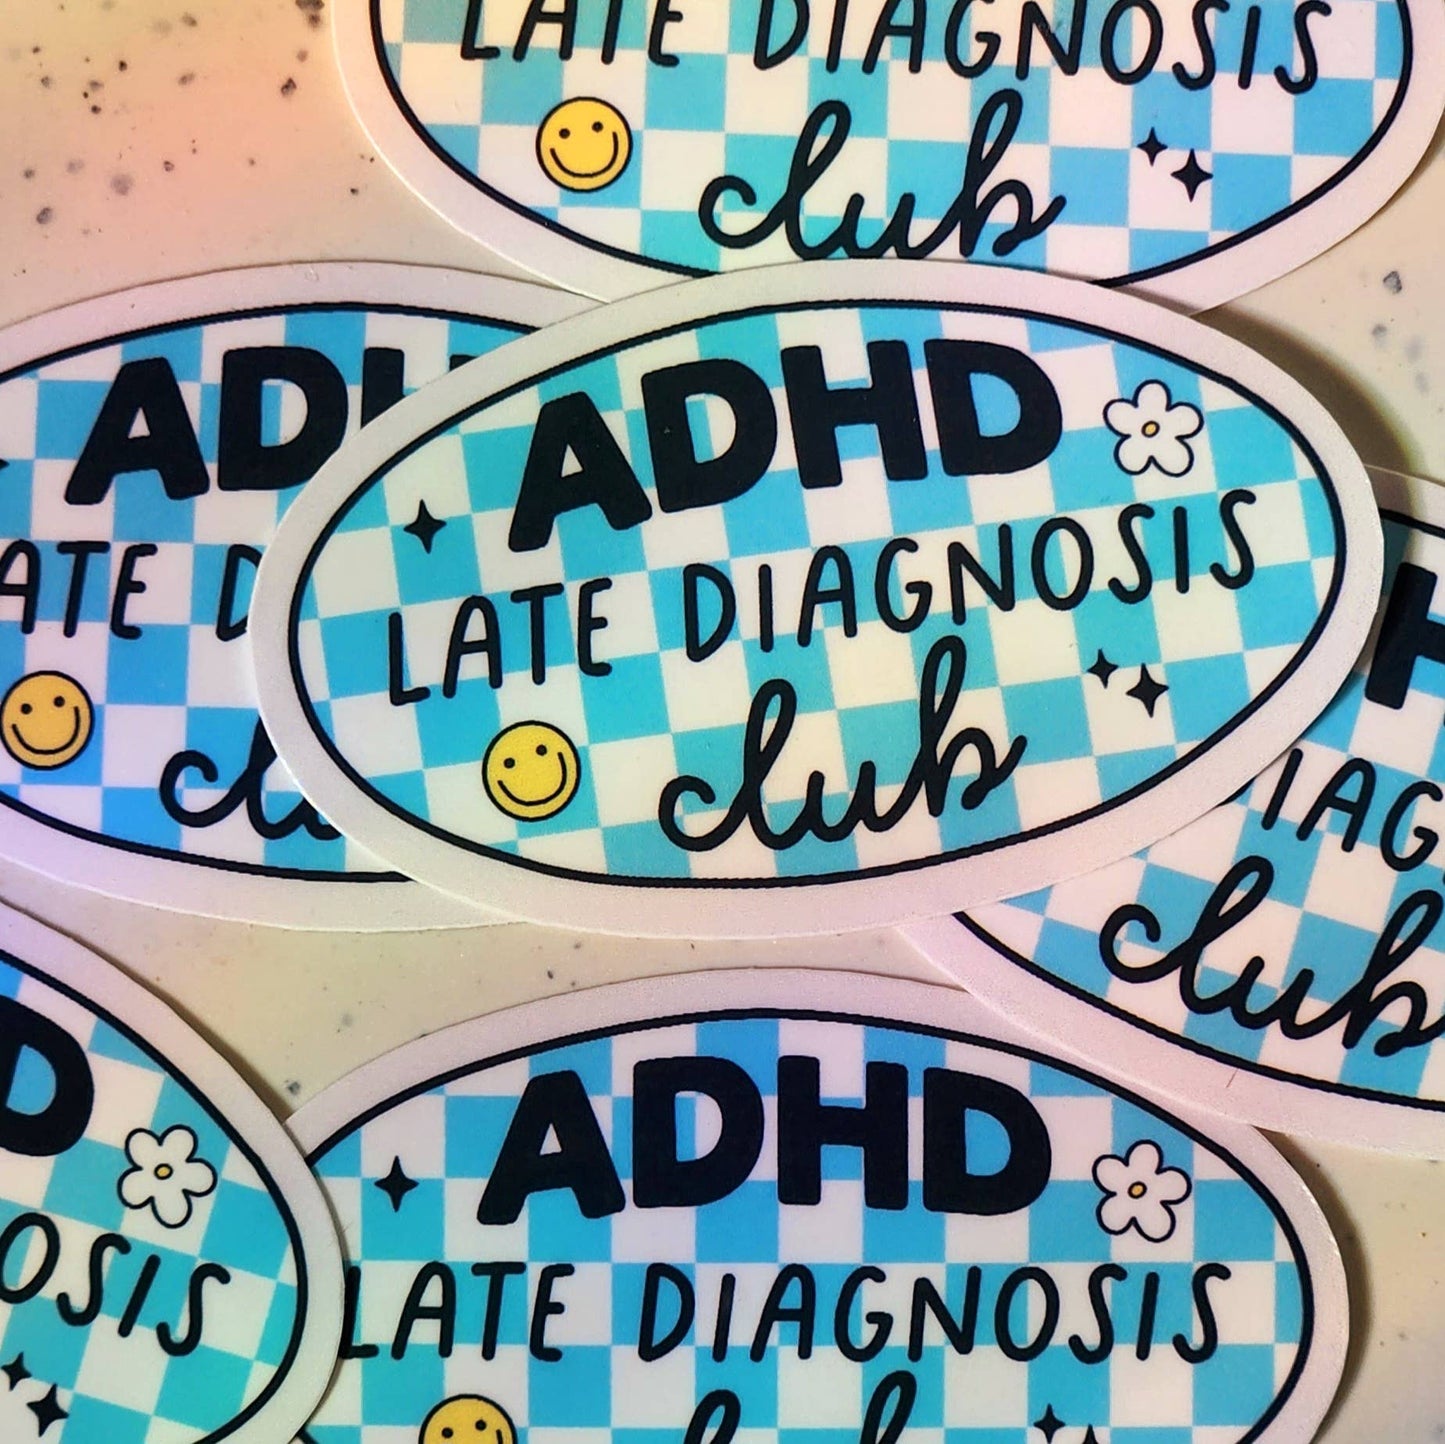 Adhd late diagnosis club sticker